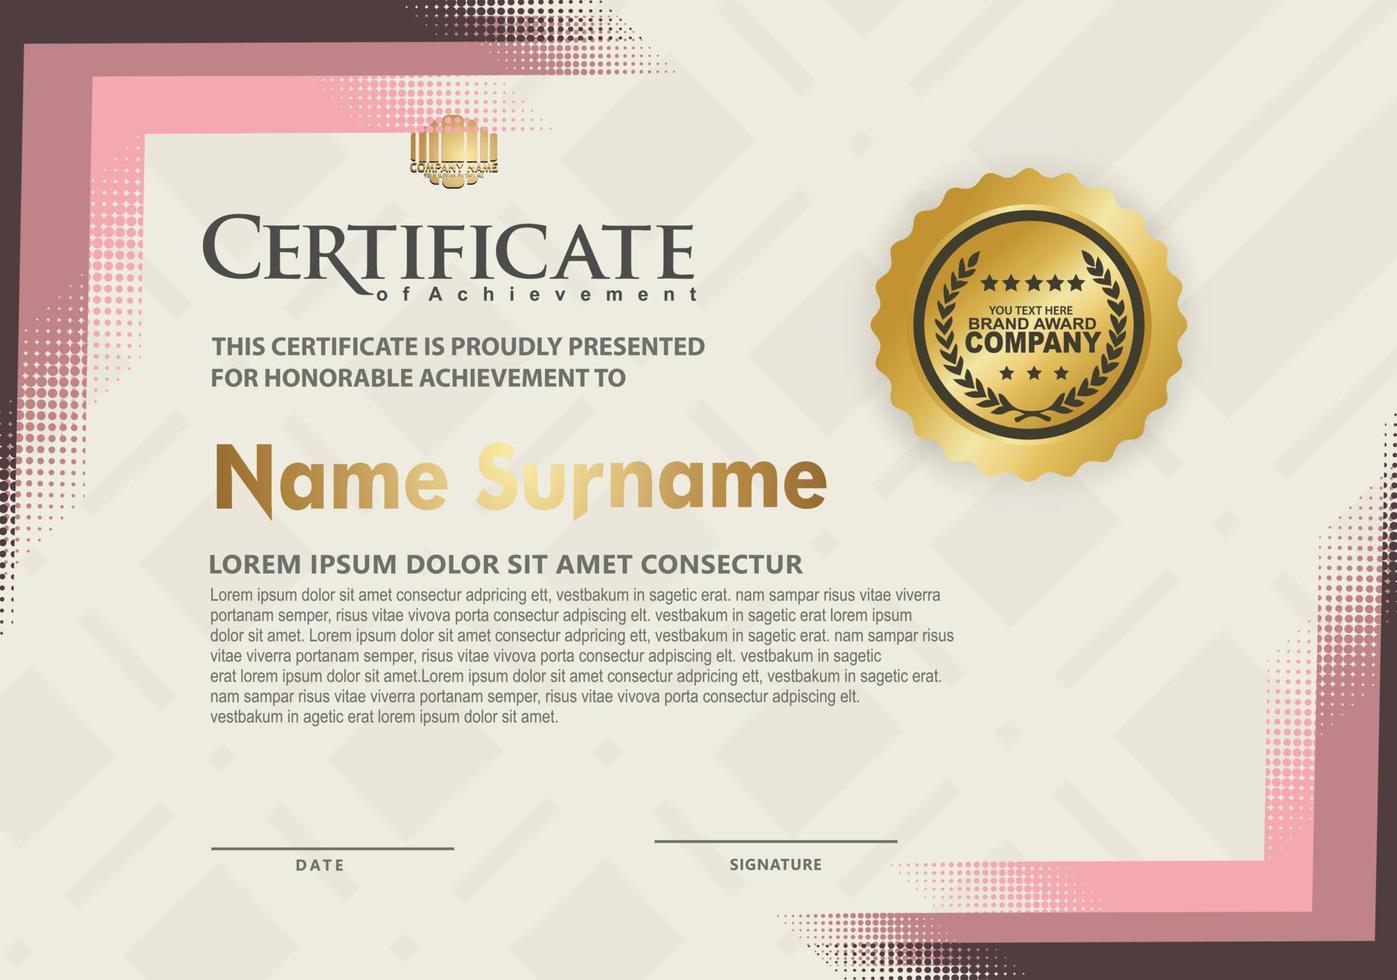 Modern certificate template background. vector illustration